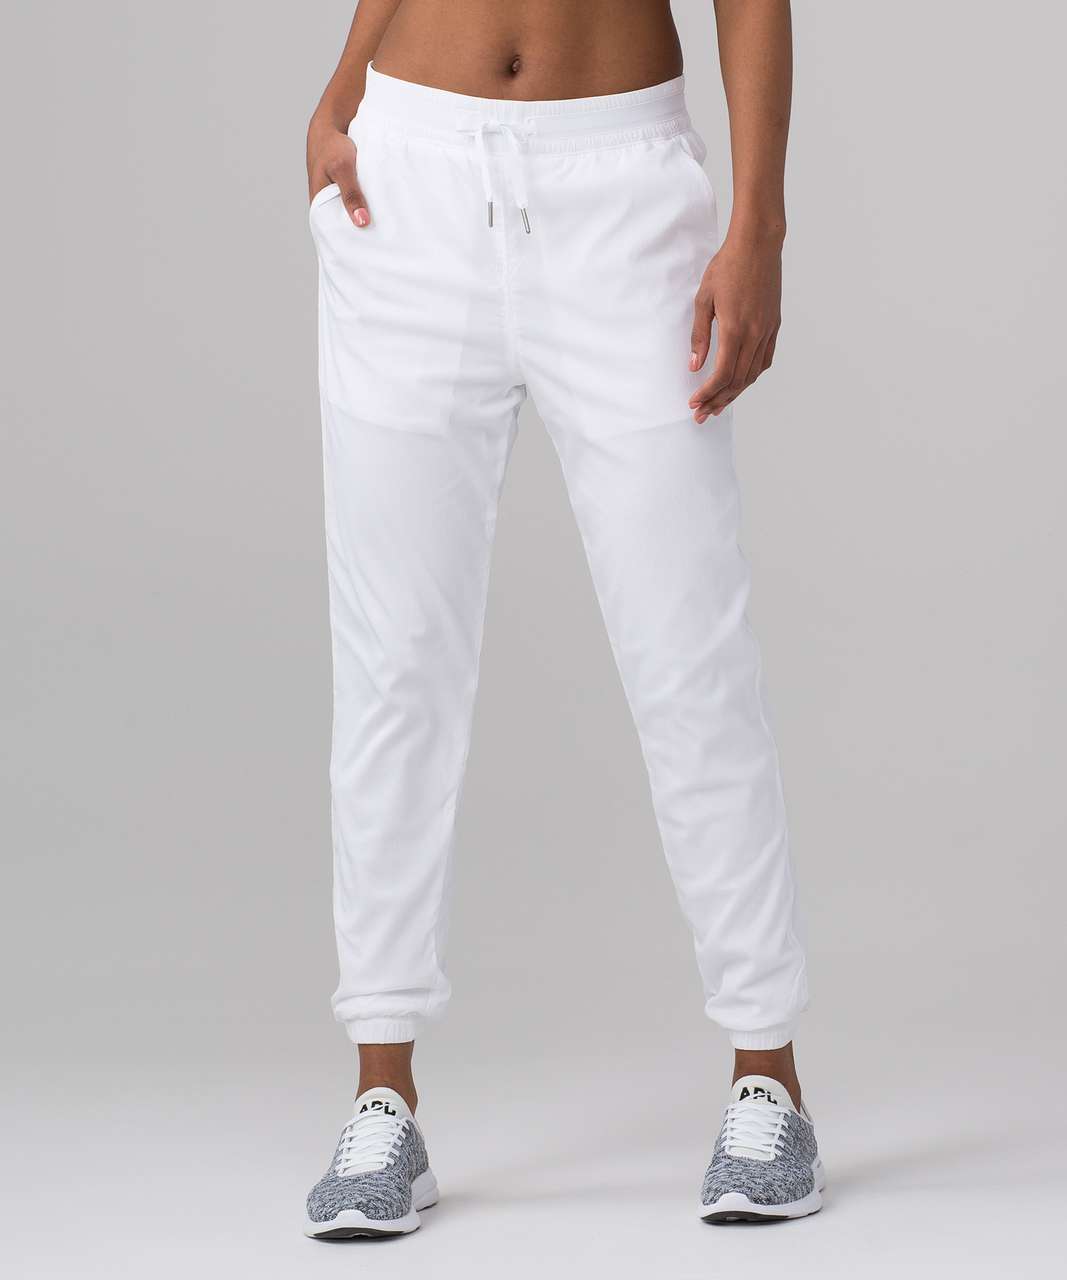 lululemon white pants